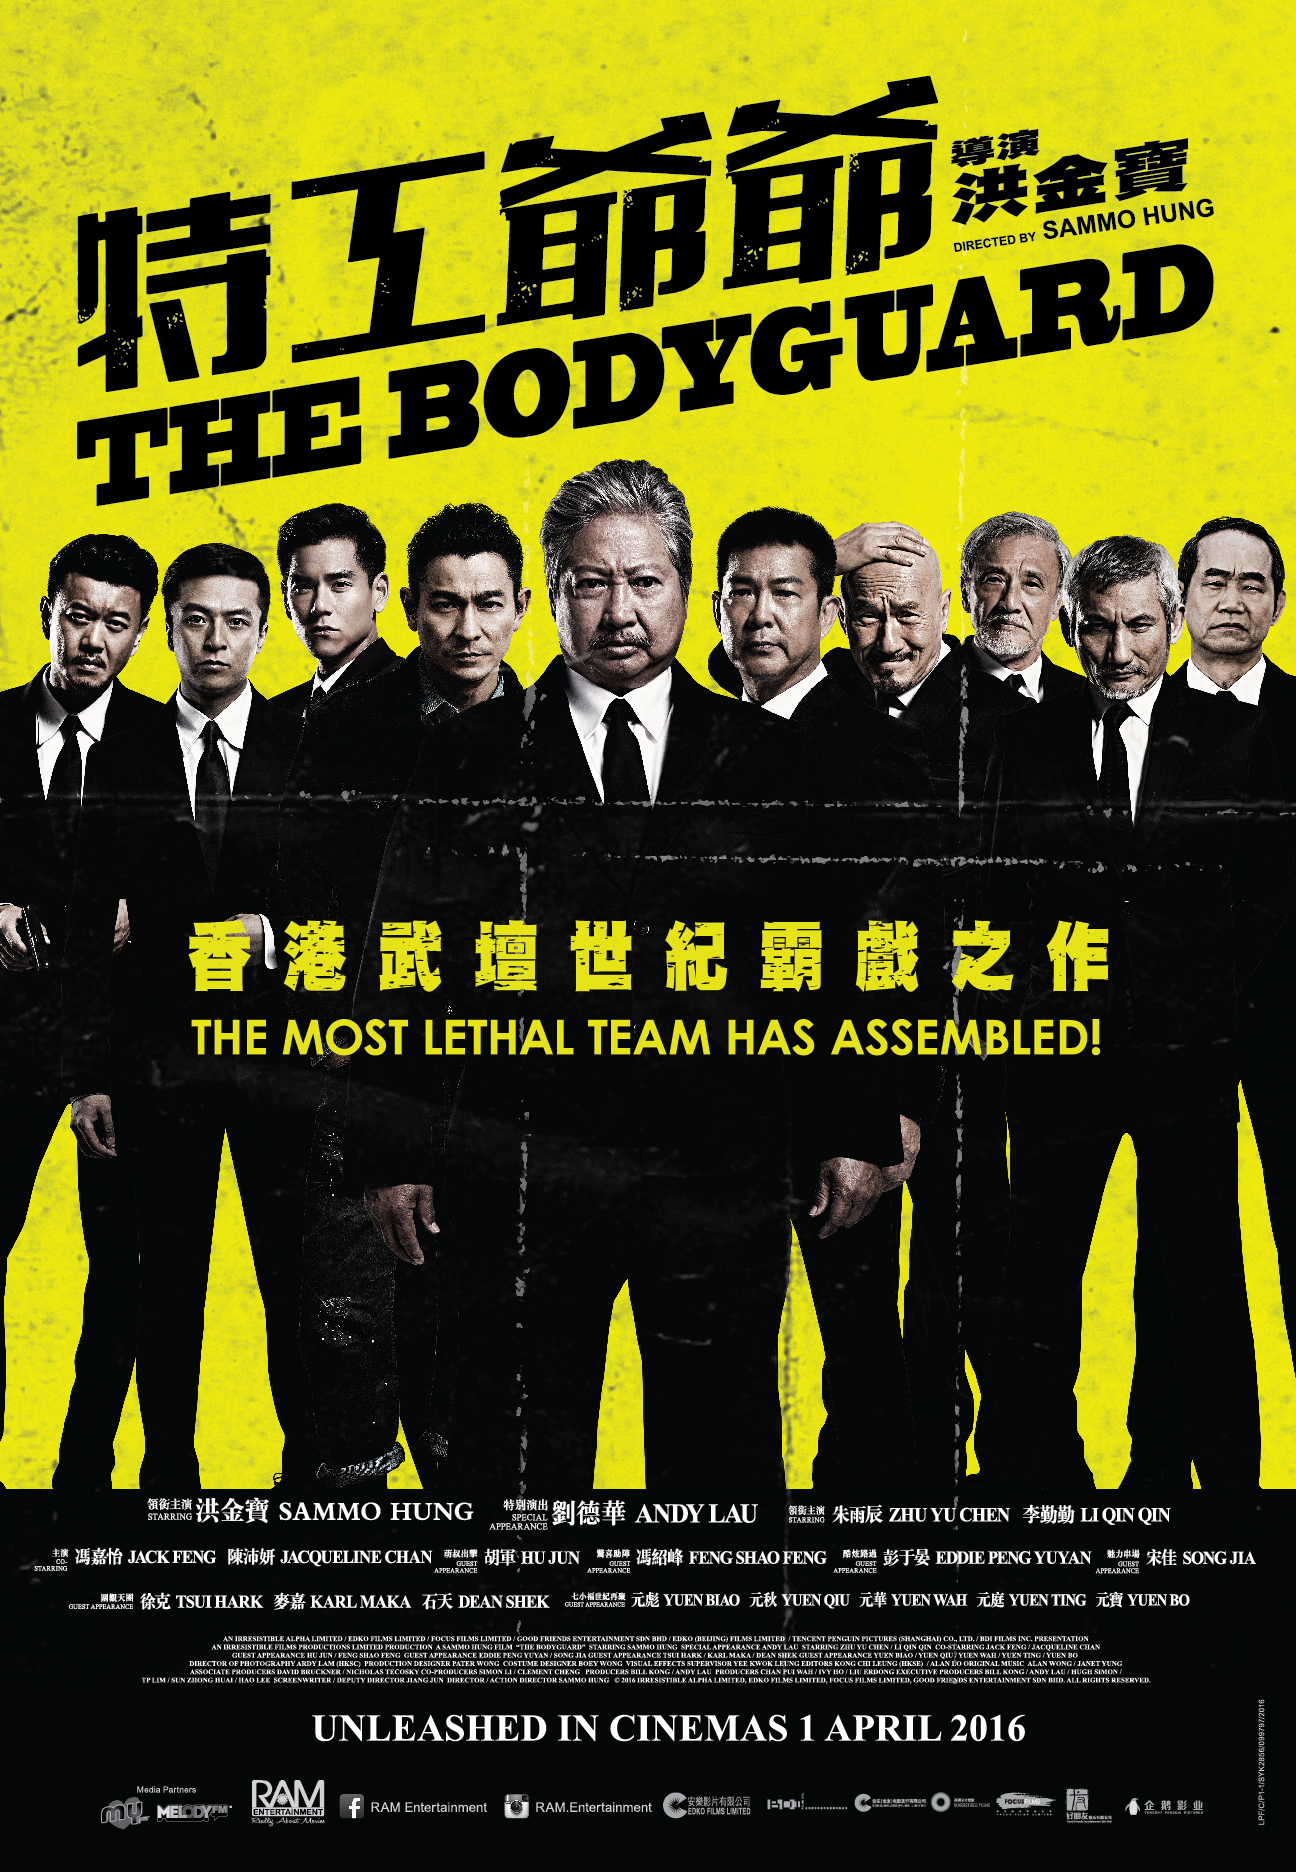 Bodyguard_Poster 27x39 yellow Latest OL-01